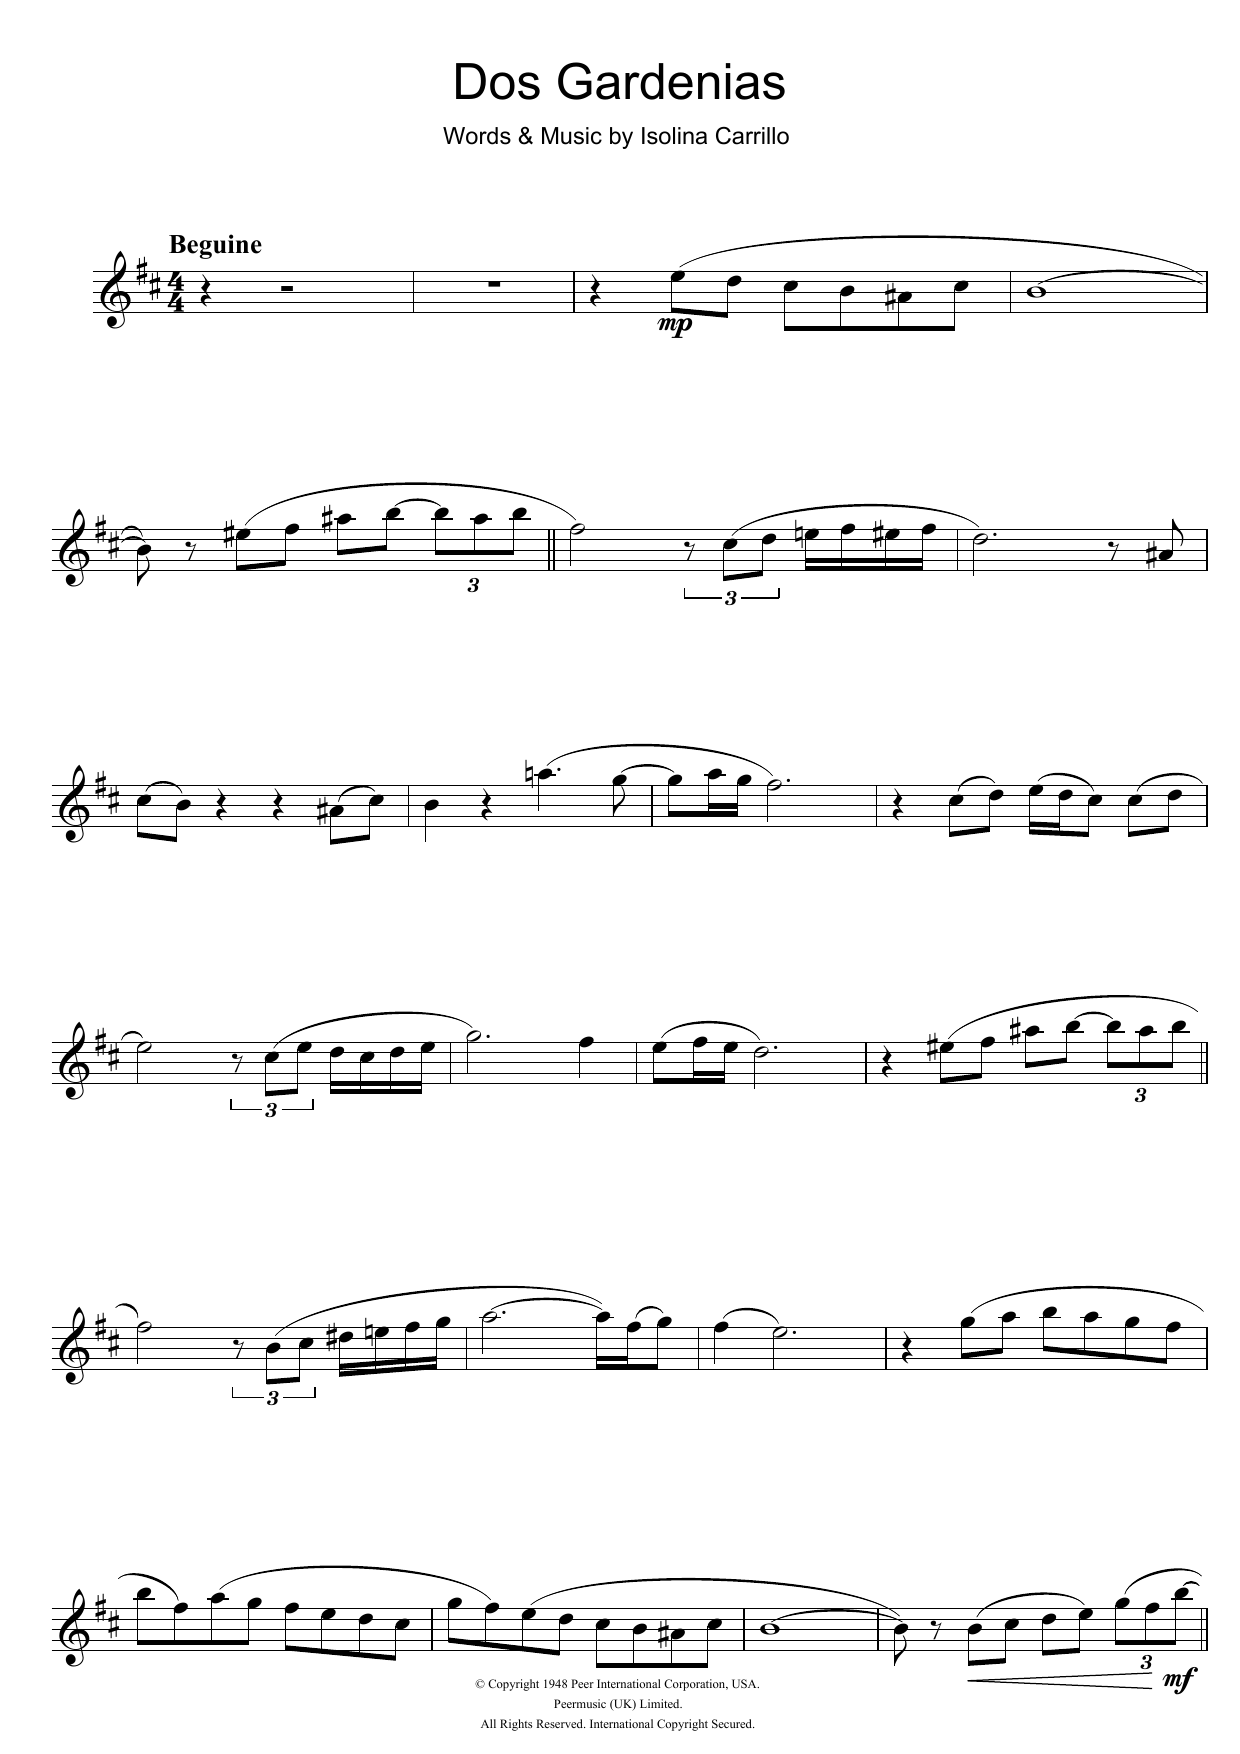 Buena Vista Social Club Dos Gardenias Sheet Music Notes & Chords for Alto Saxophone - Download or Print PDF